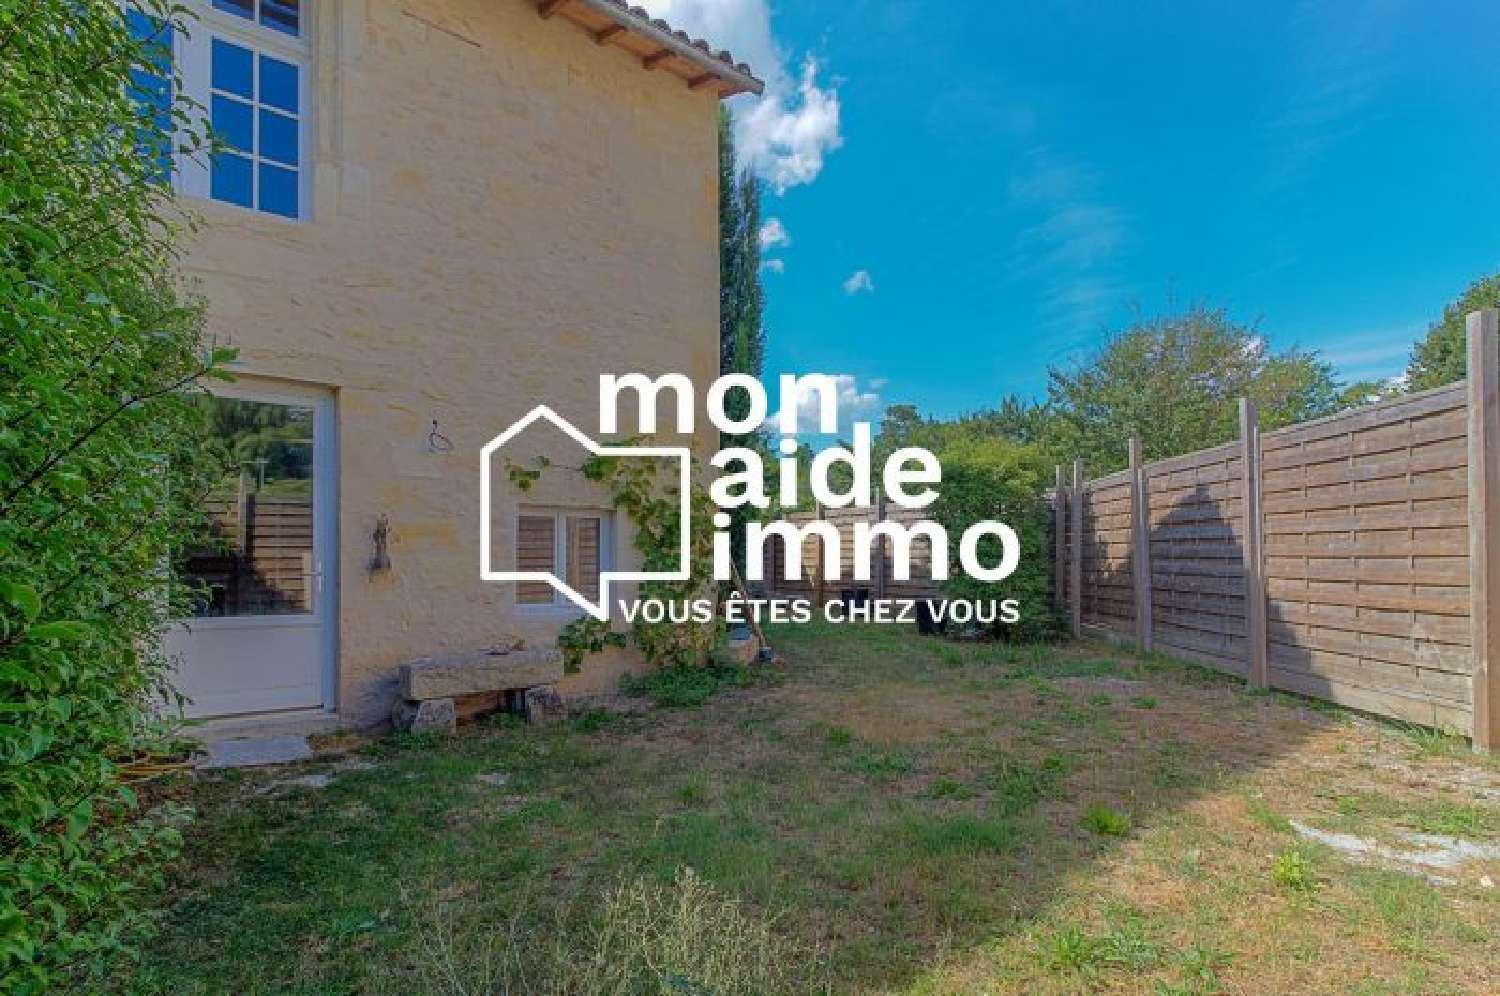  à vendre maison Langoiran Gironde 1